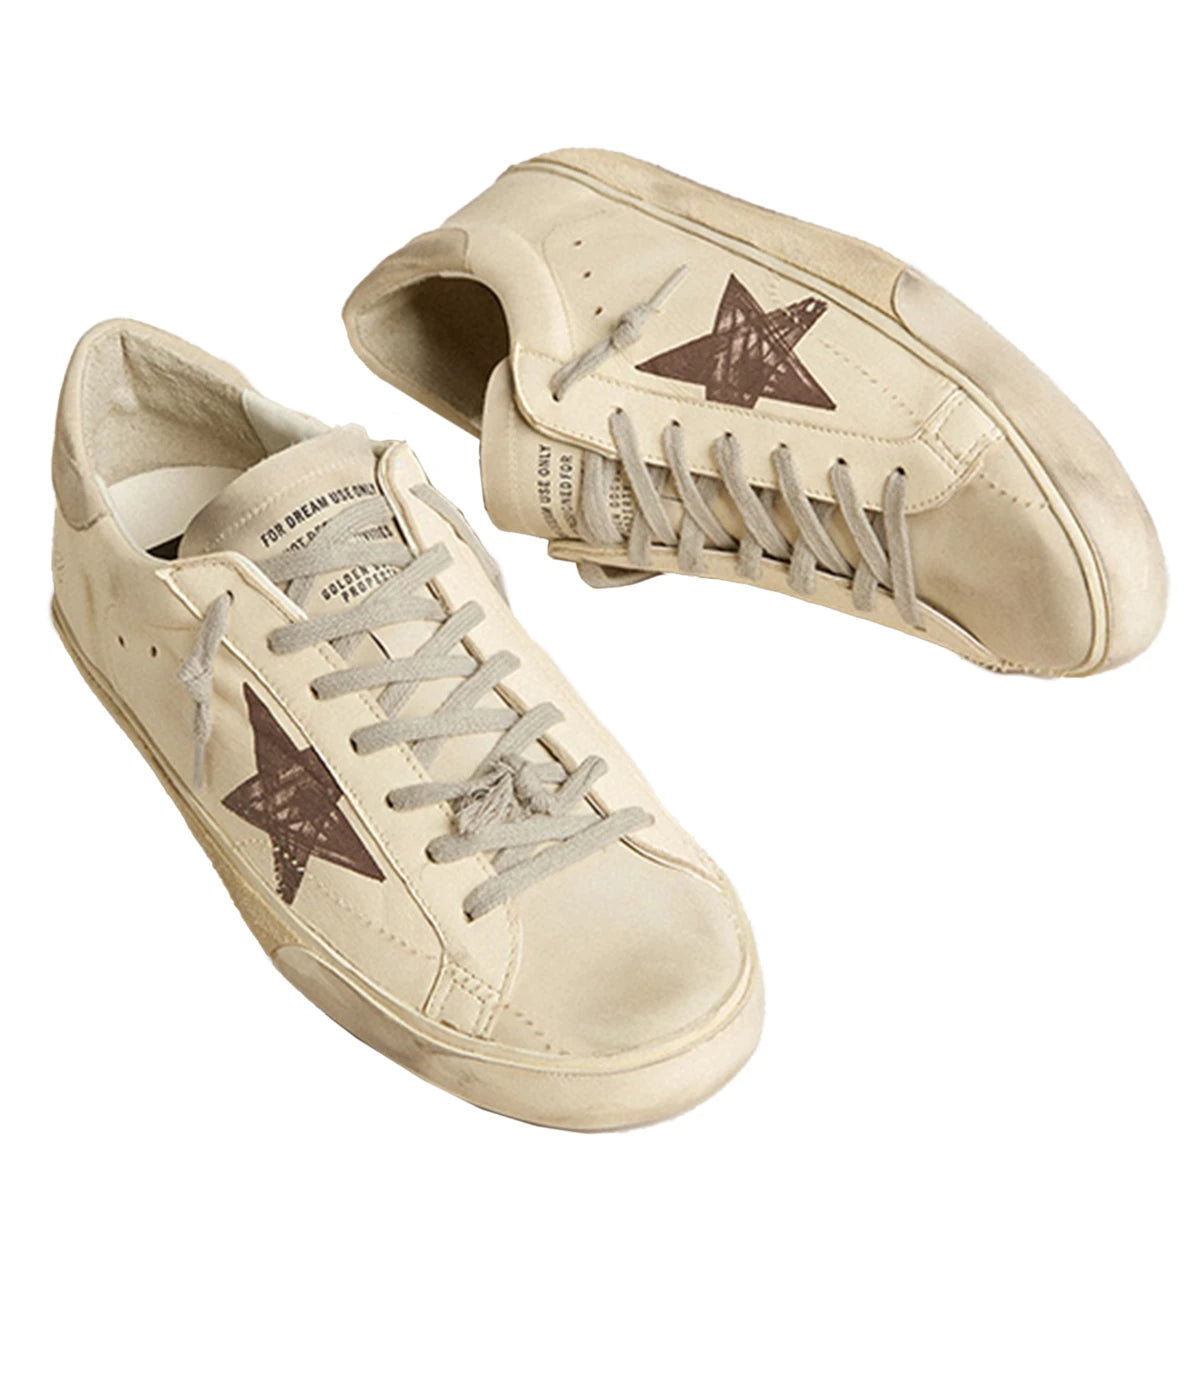 Super-Star Nappa Printed Star Sneaker in White, Ice & Brown